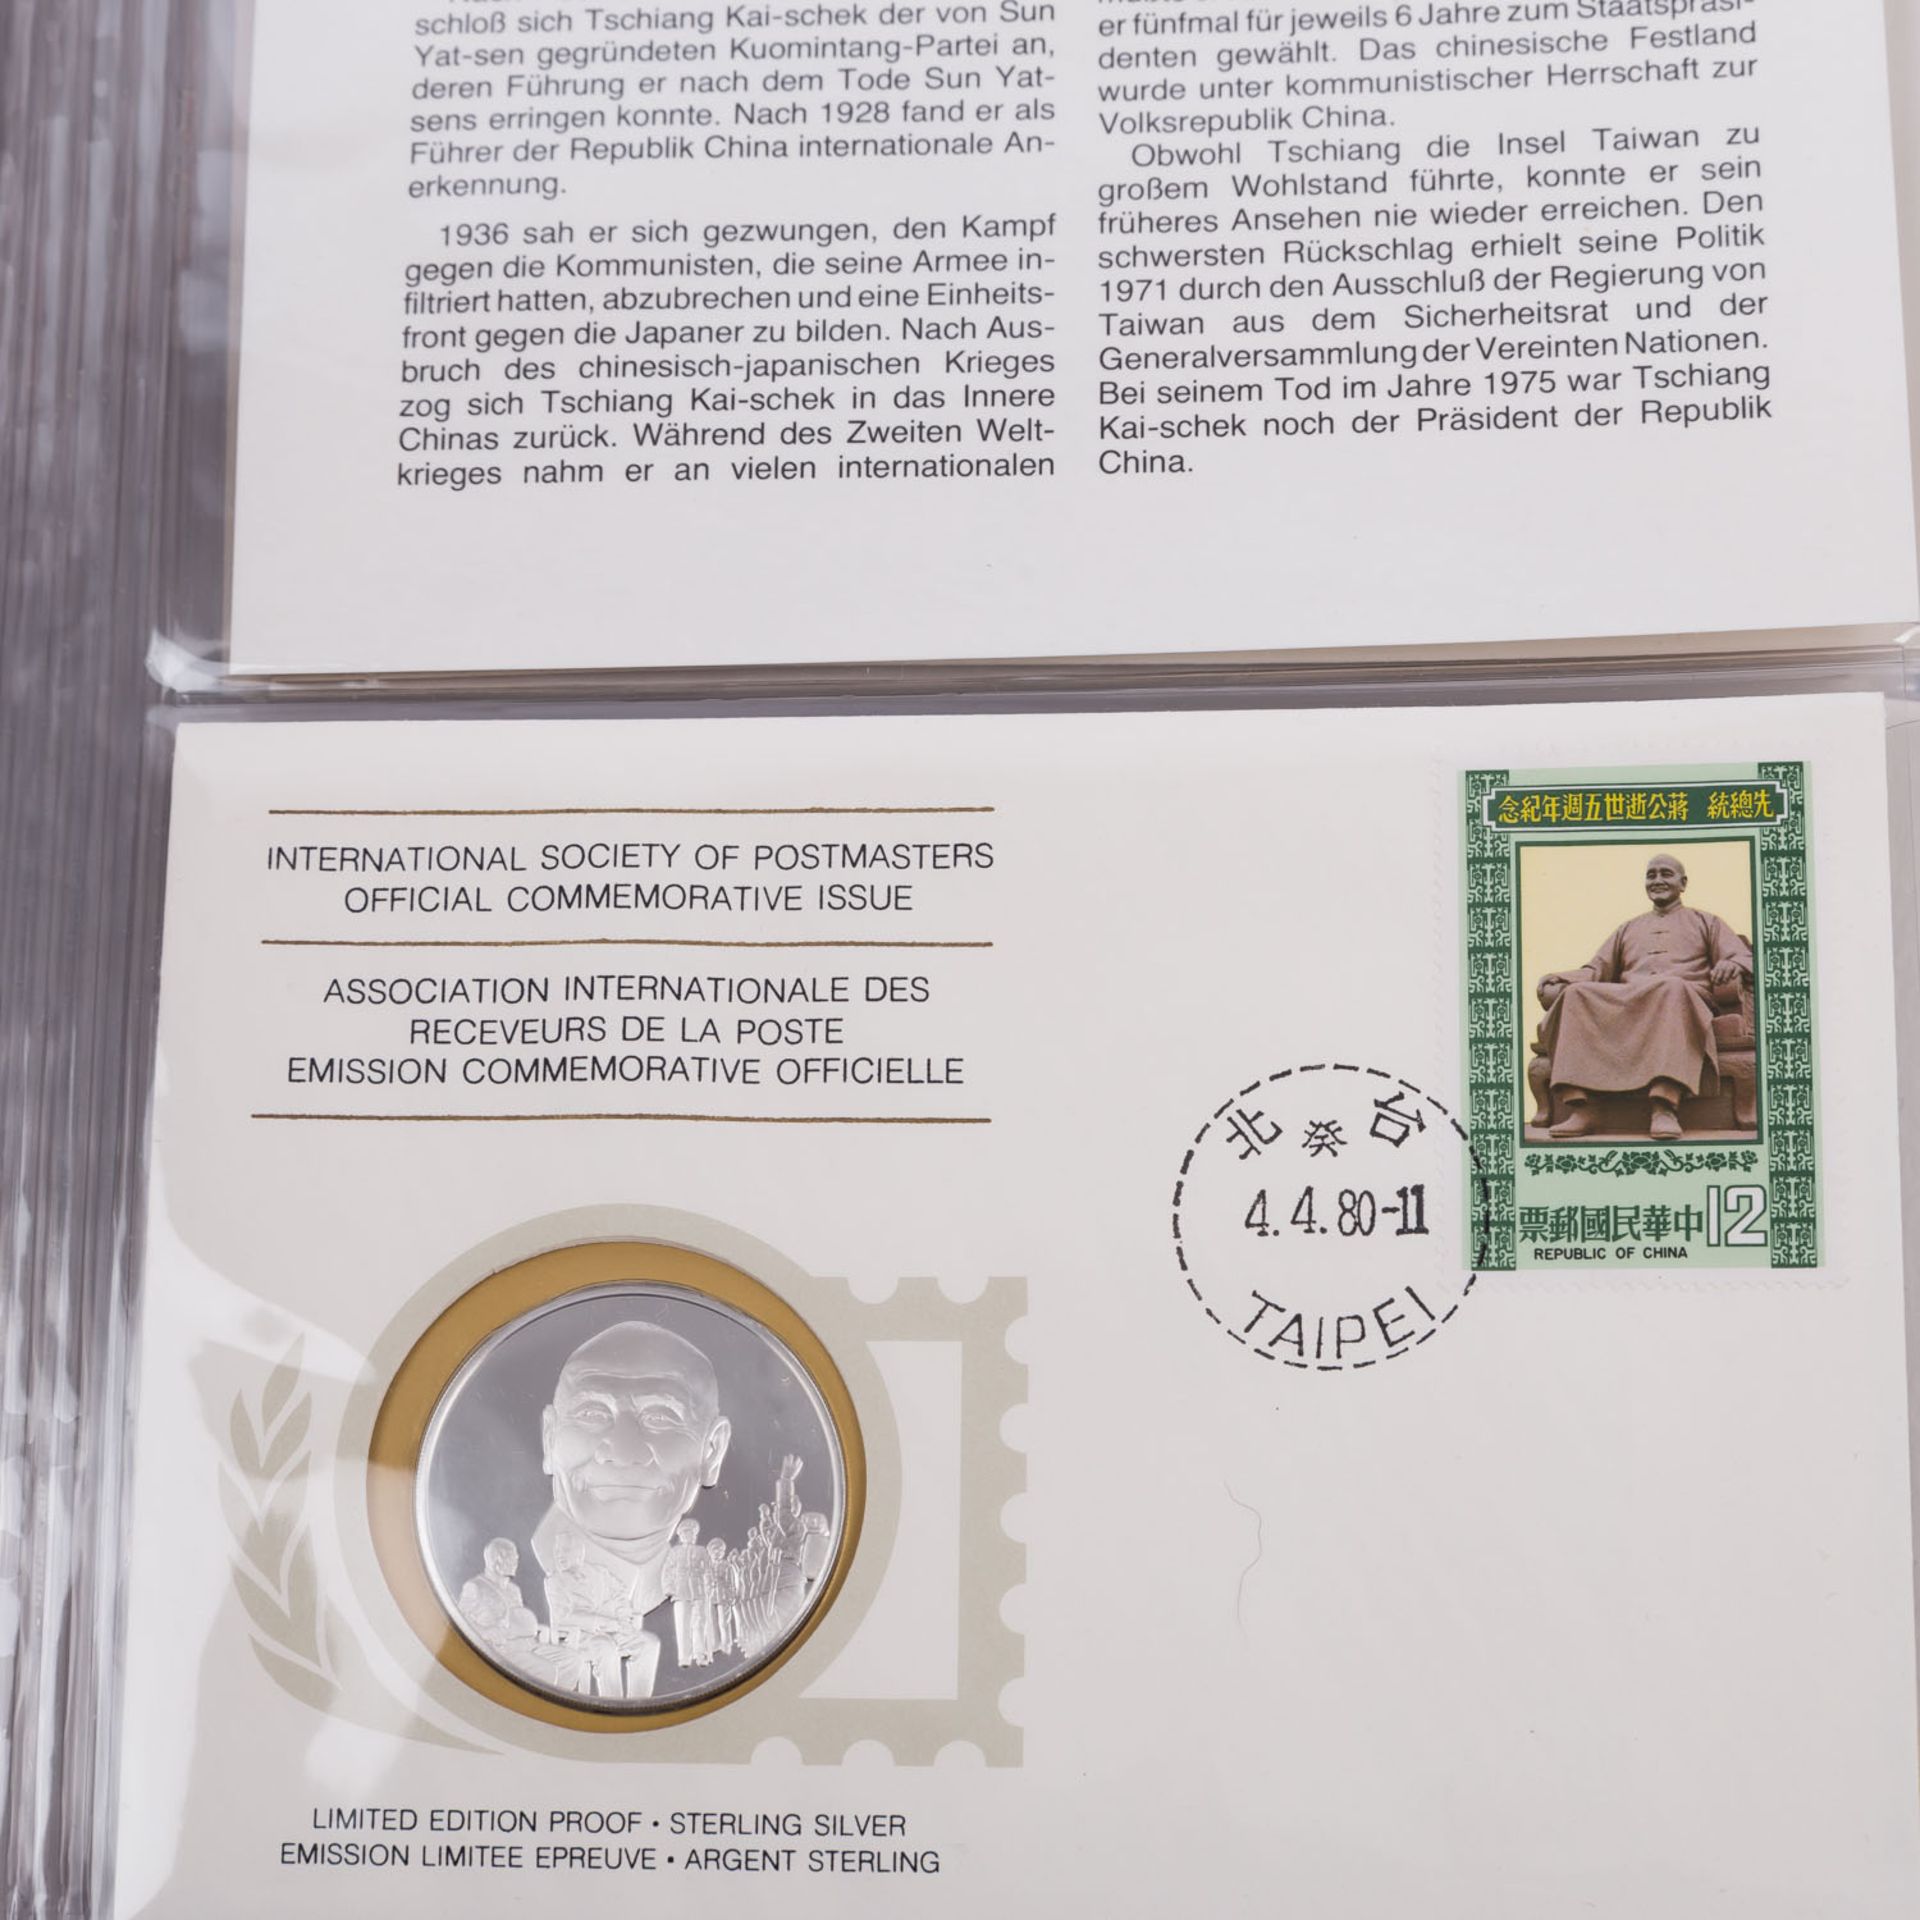 Ca. 49 Postoffice Master Briefe mit Sterling Silber Medaillen, - Image 6 of 6